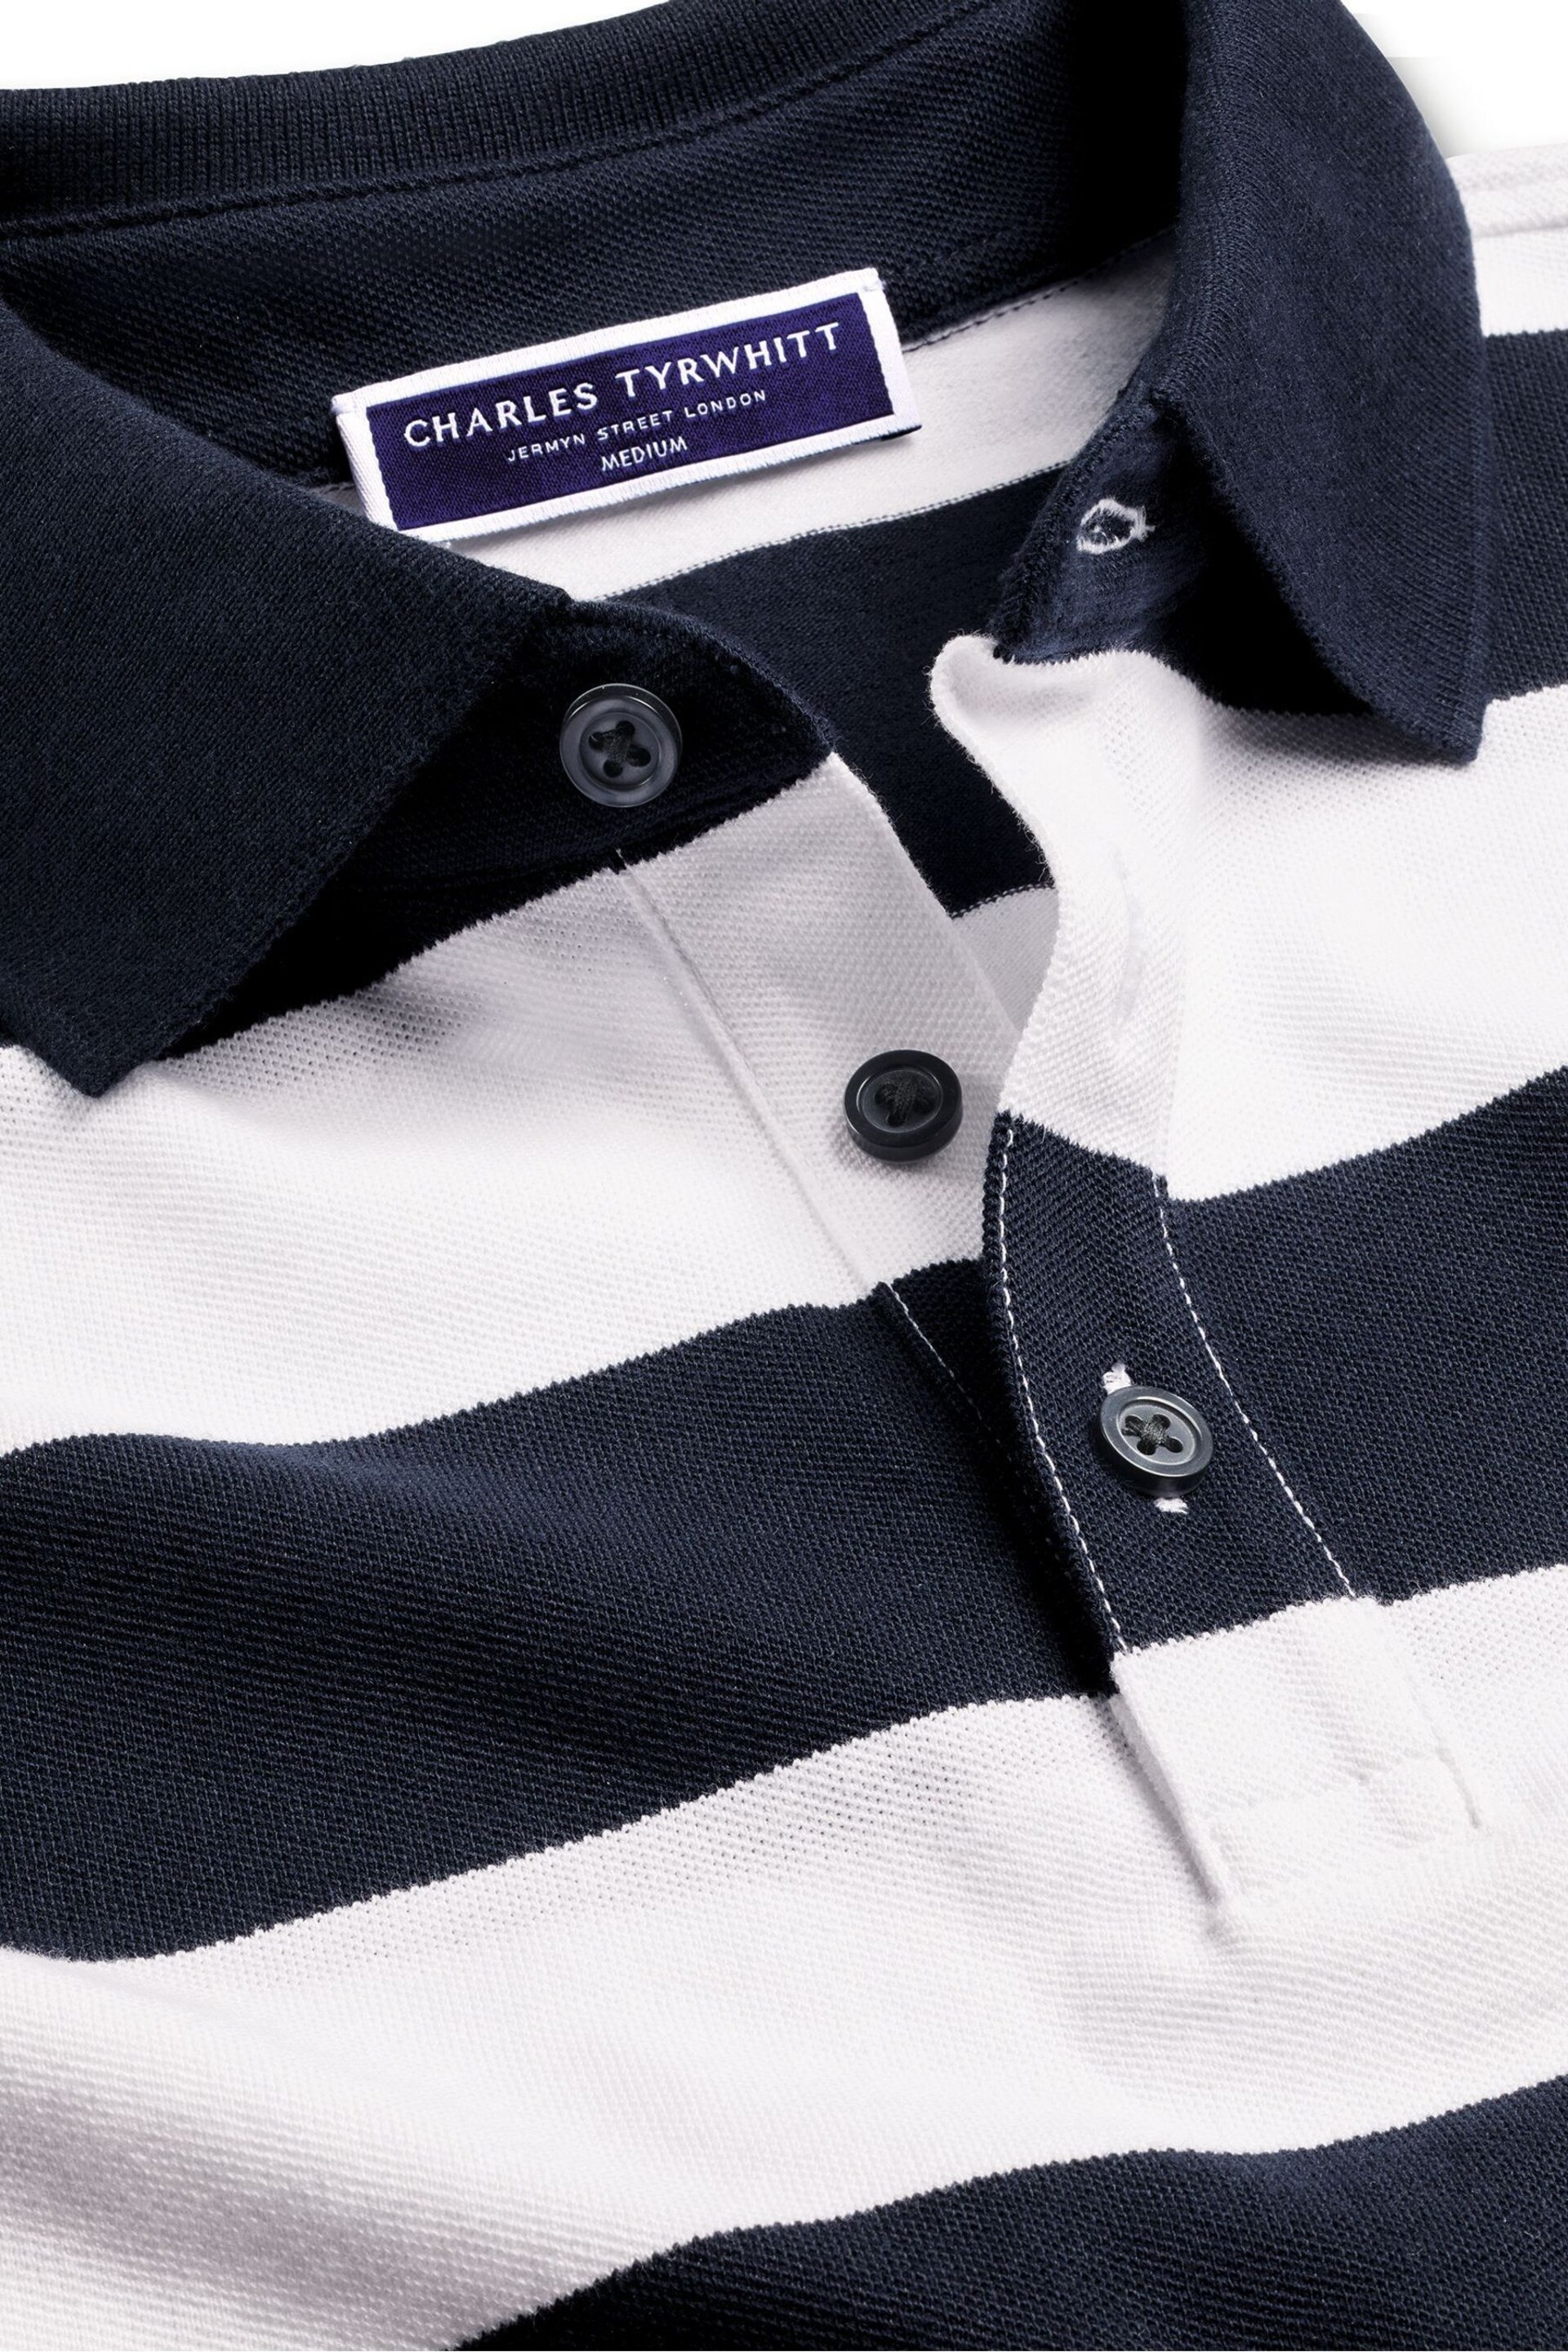 Charles Tyrwhitt Blue Short Sleeve Cotton Stretch Pique Polo Shirt - Image 4 of 5